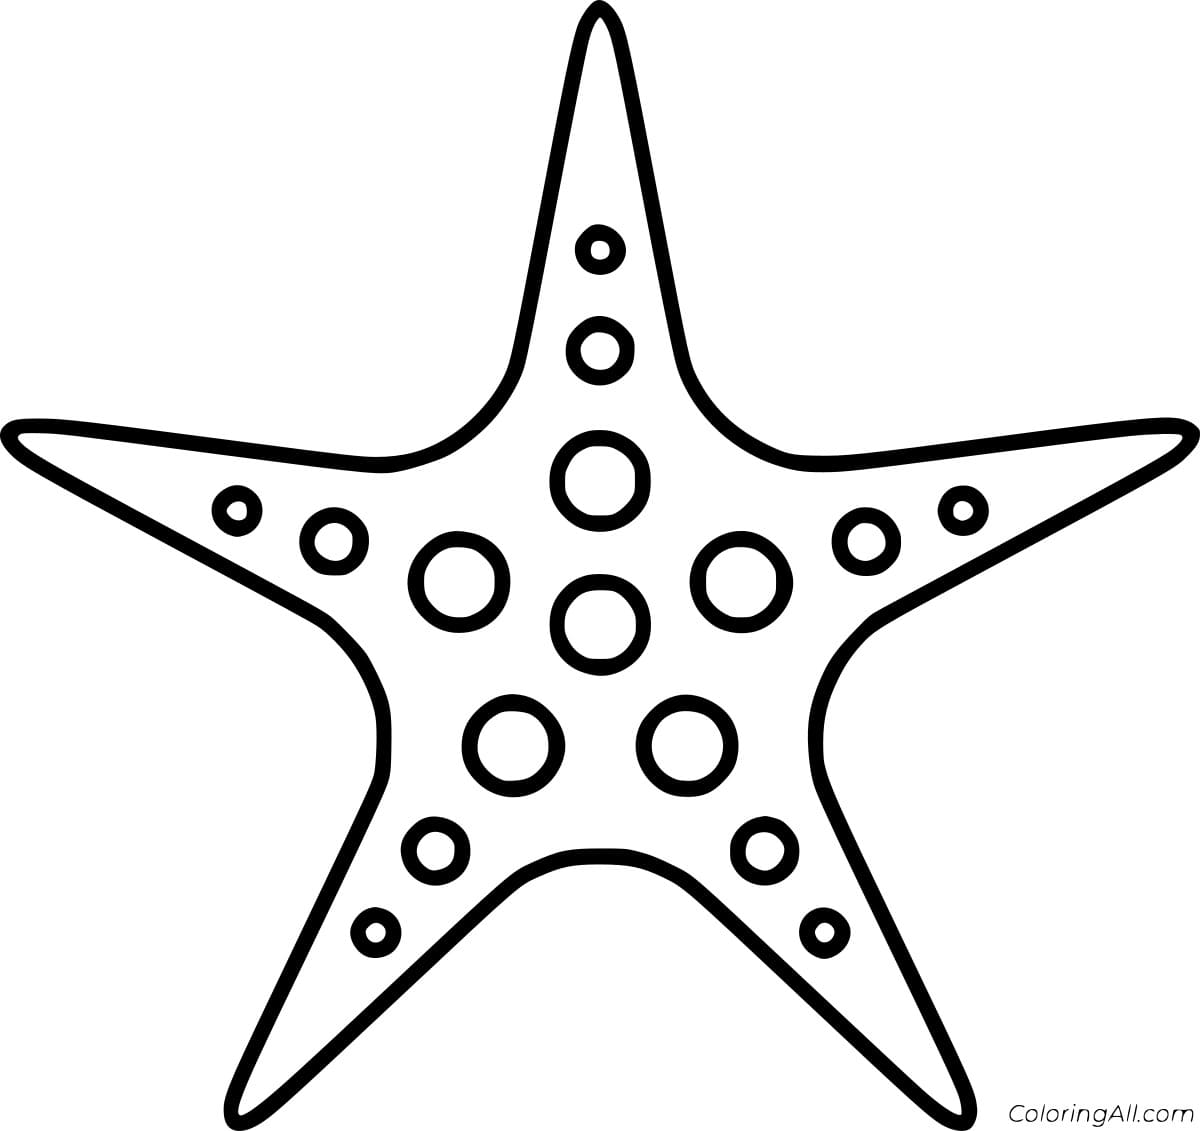 Vermilion Biscuit Sea Star Image